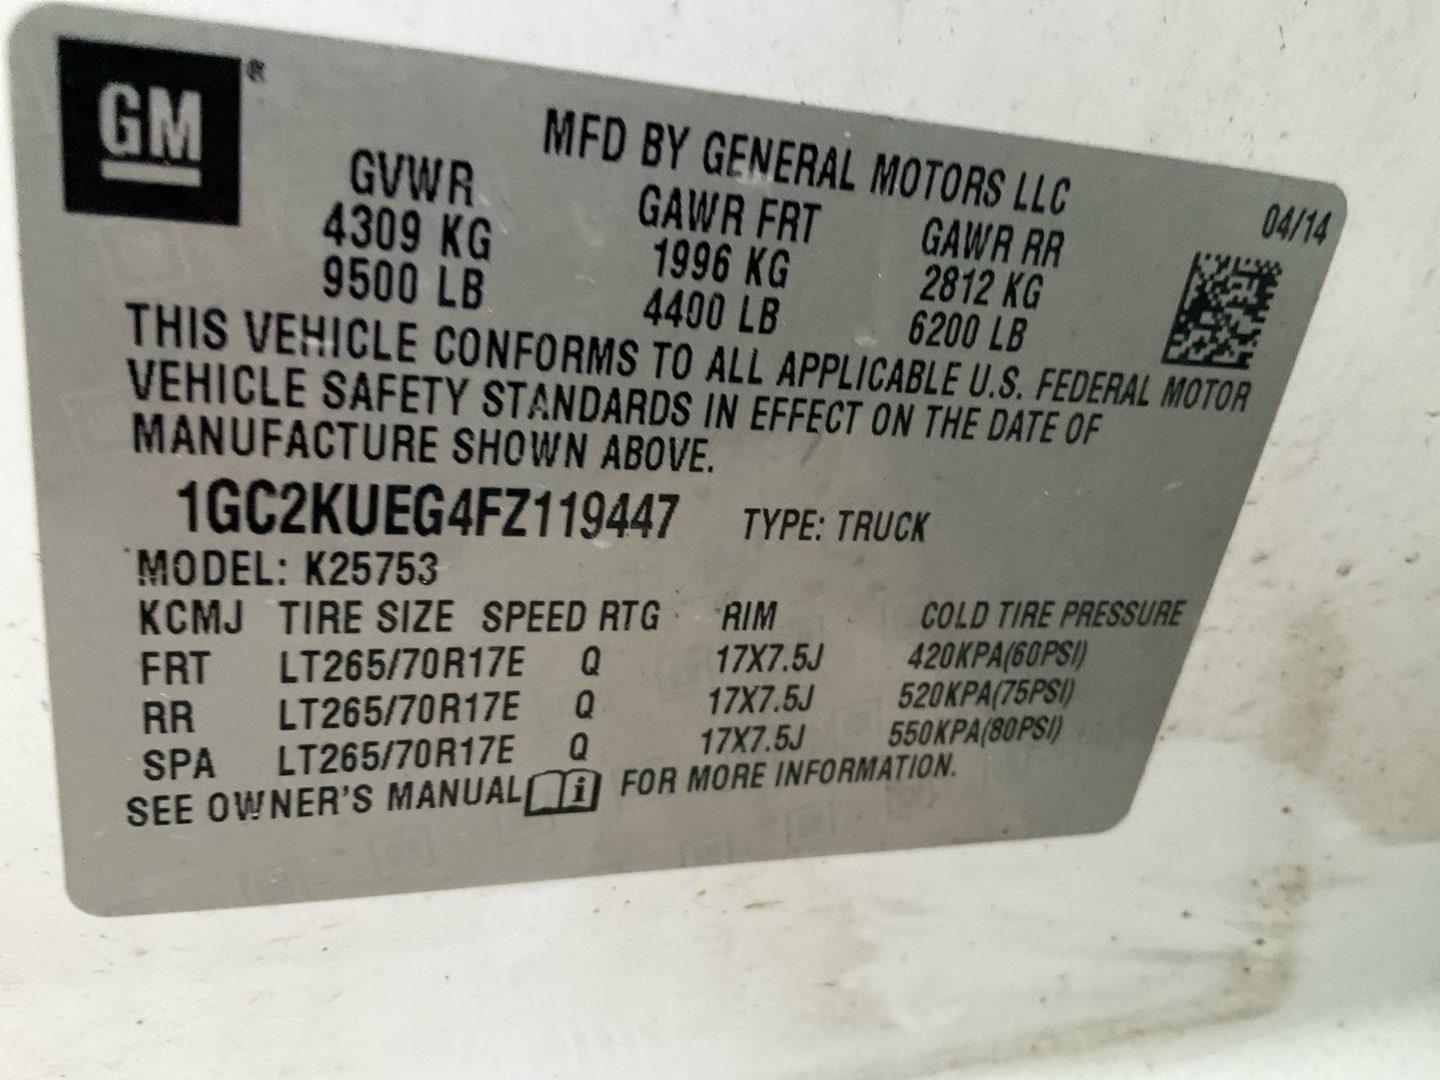 2015 CHEVROLET SILVERADO 2500 W/T Serial Number: 1GC2KUEG4FZ119447